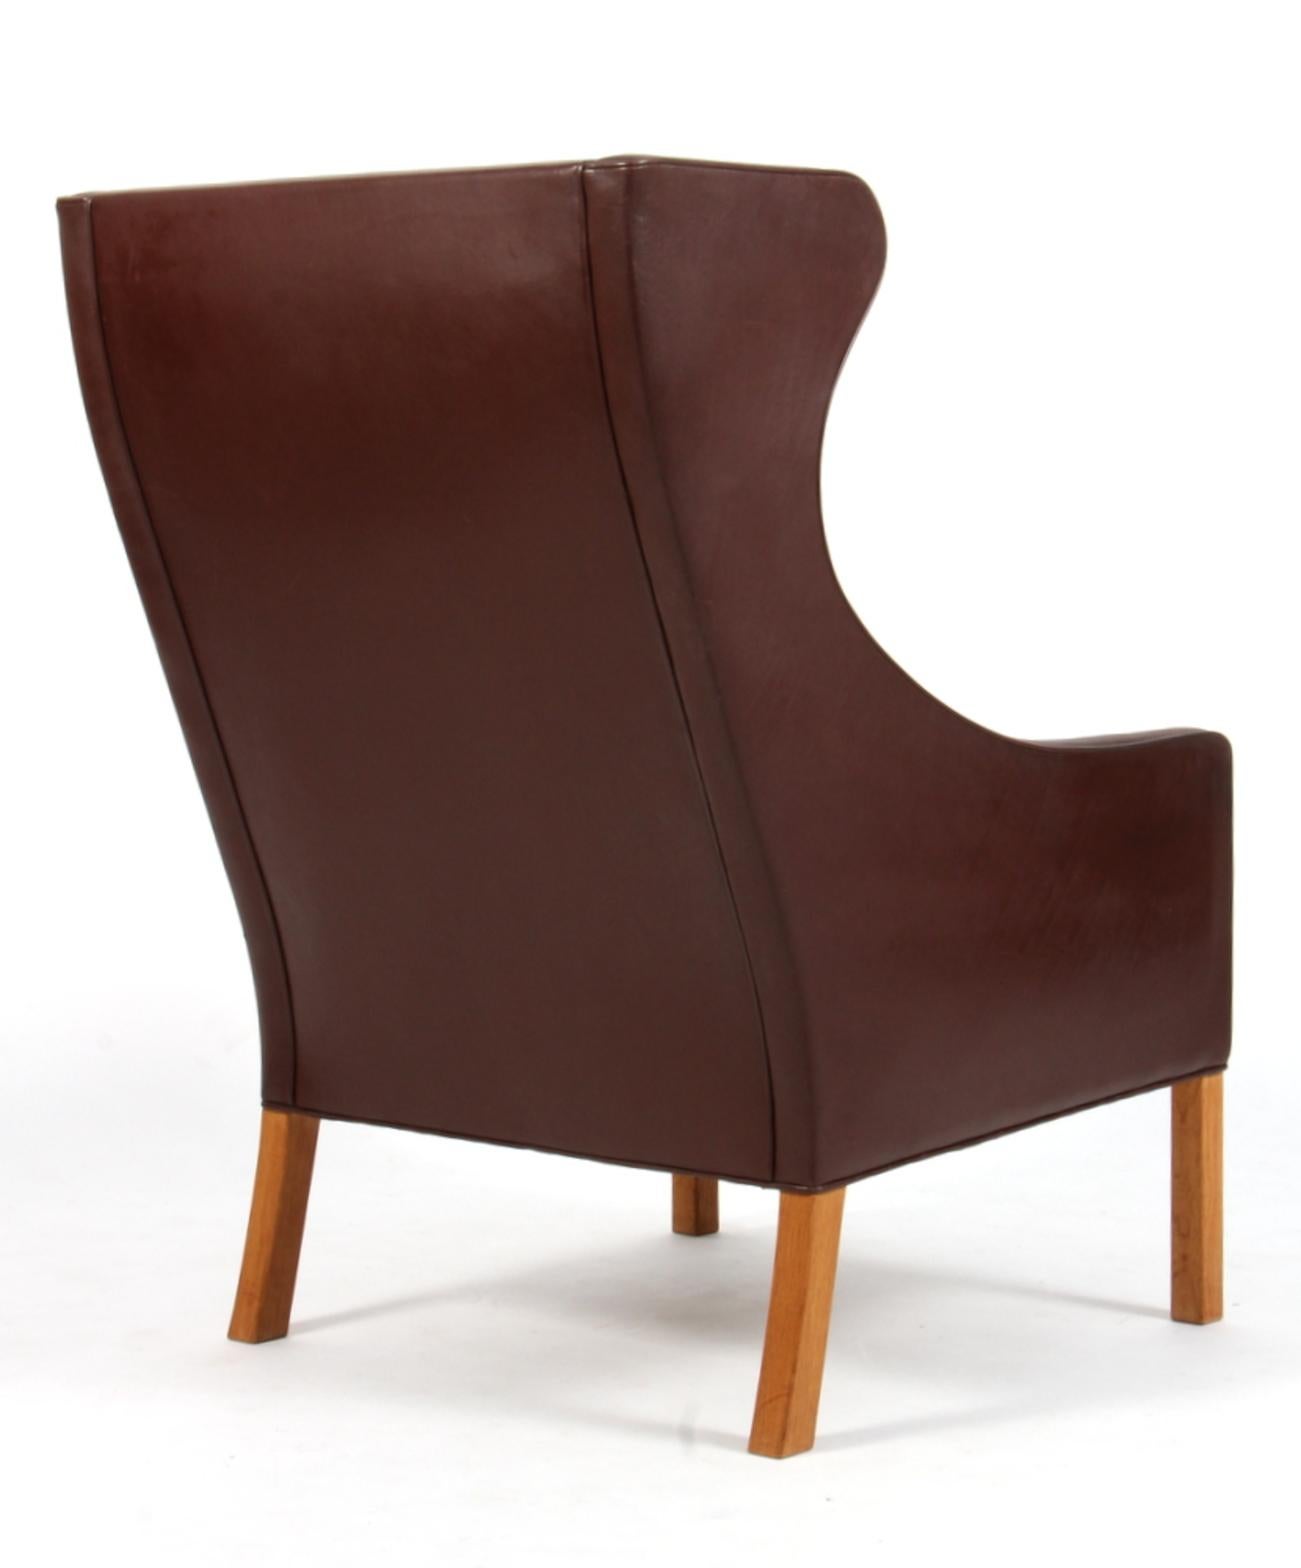 Mid-Century Modern Børge Mogensen Wing Back Chair in Brown Original Leather, Model 2204